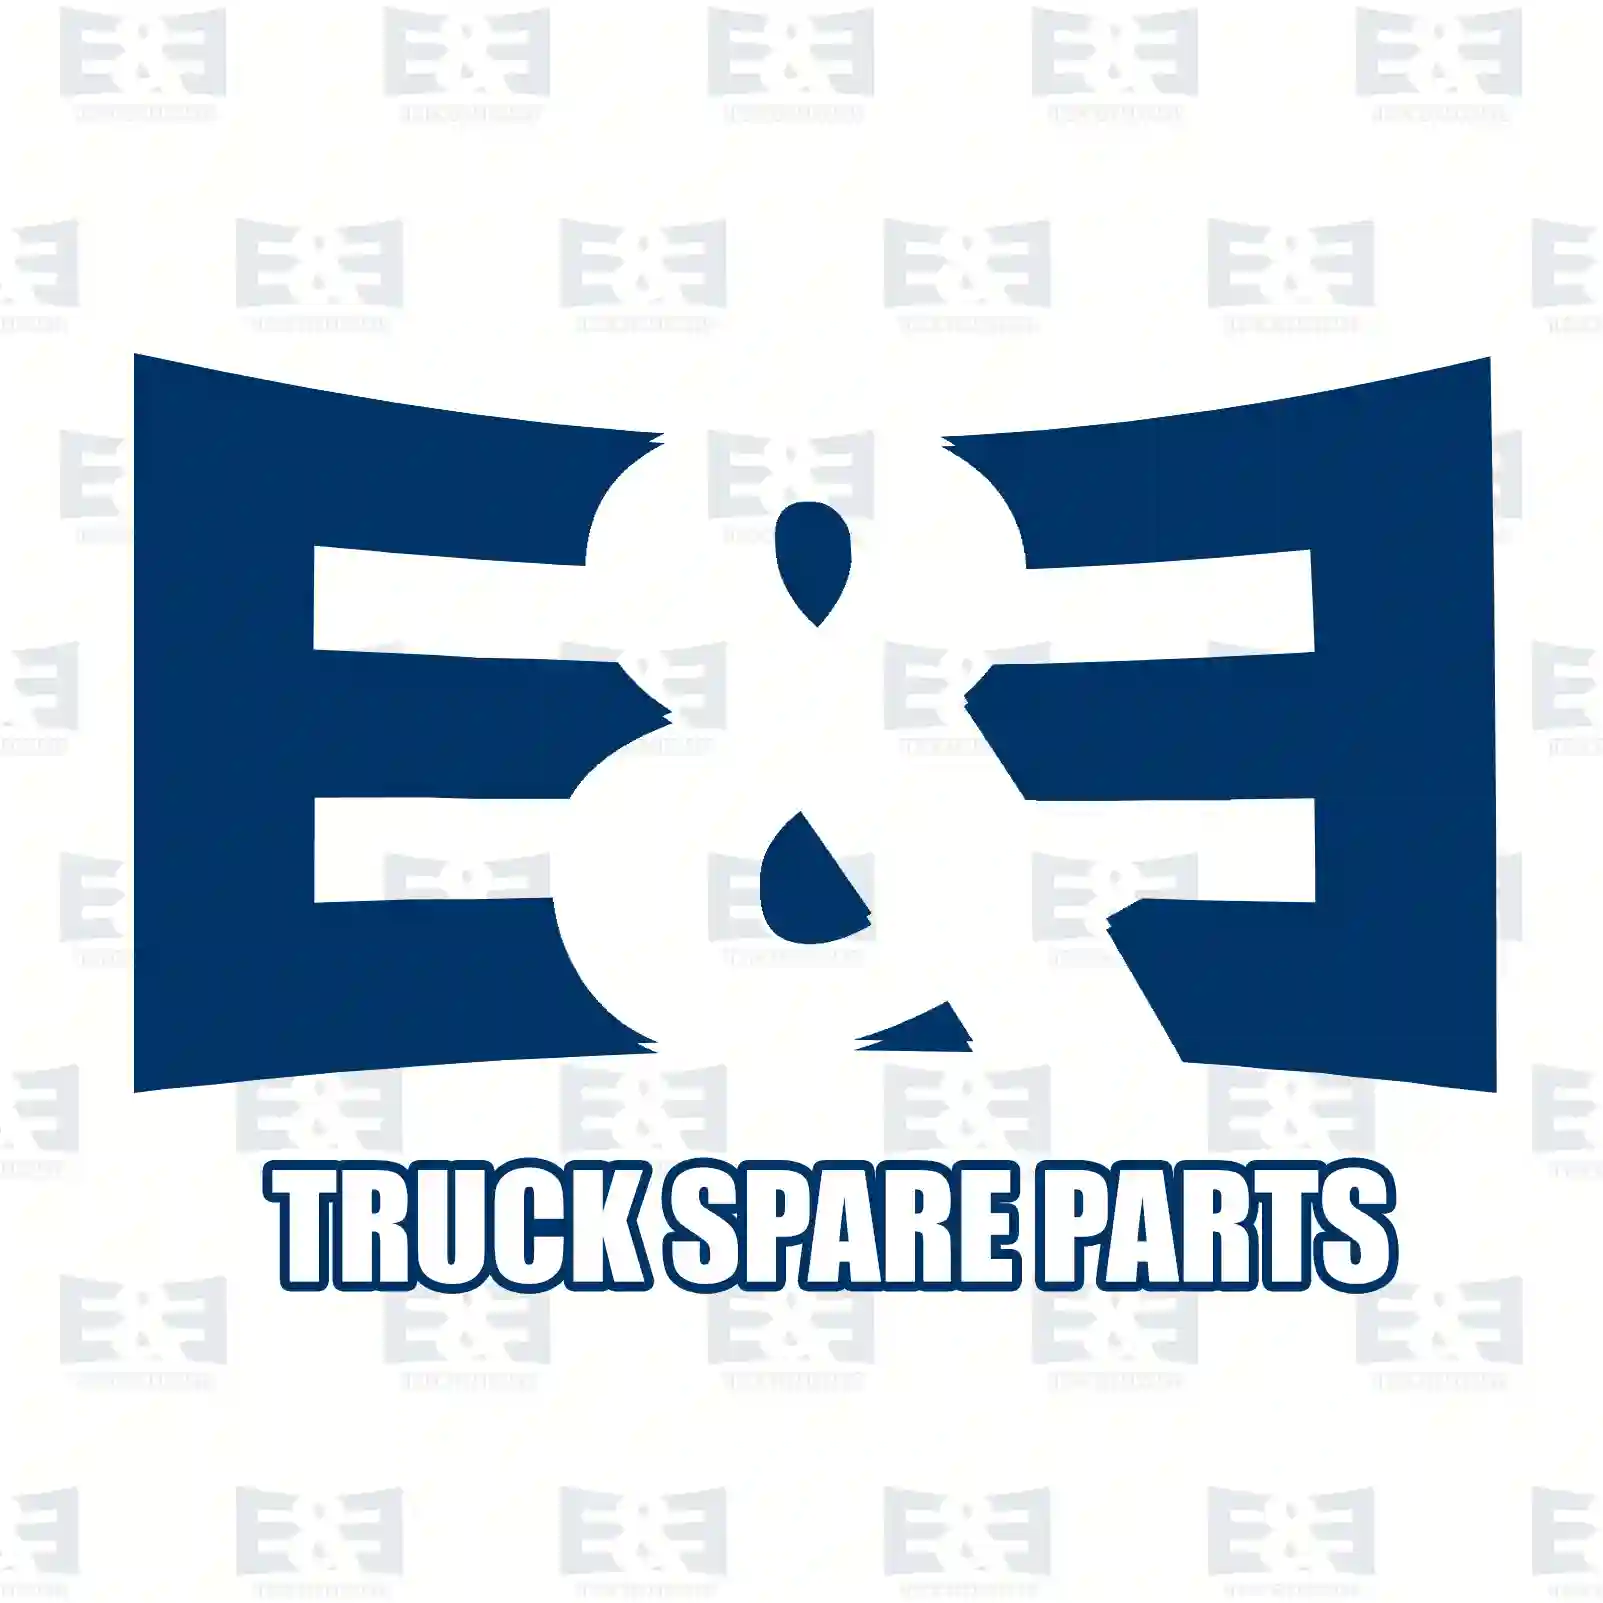 Drum brake lining kit, axle kit - oversize, 2E2293506, 3091281S1, 3097168S1 ||  2E2293506 E&E Truck Spare Parts | Truck Spare Parts, Auotomotive Spare Parts Drum brake lining kit, axle kit - oversize, 2E2293506, 3091281S1, 3097168S1 ||  2E2293506 E&E Truck Spare Parts | Truck Spare Parts, Auotomotive Spare Parts